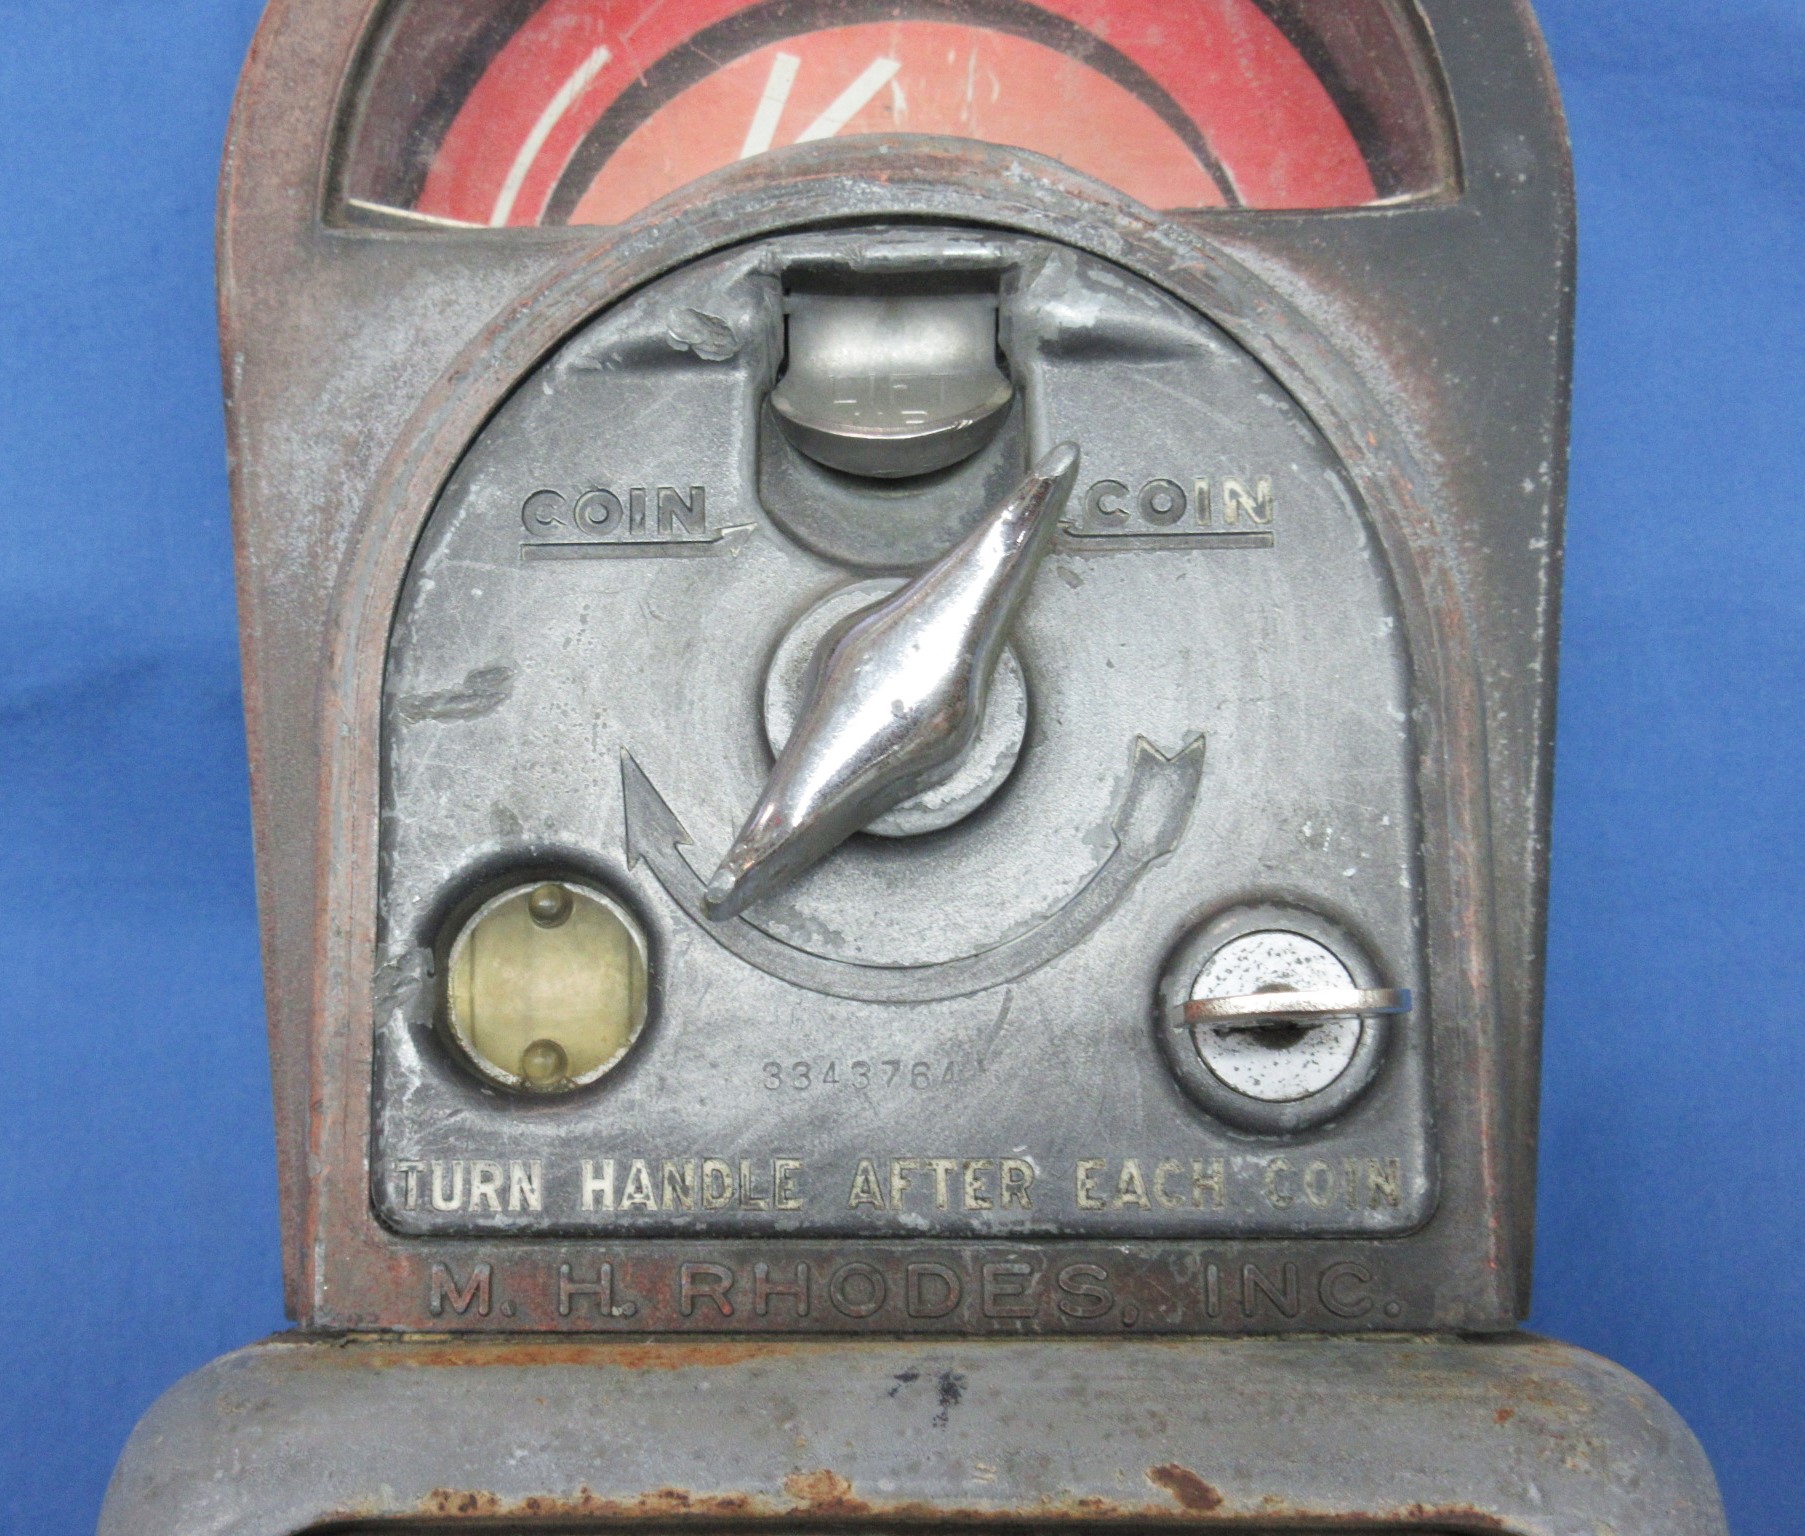 Vintage Rhodes M.H. Rhodes parking meter with key